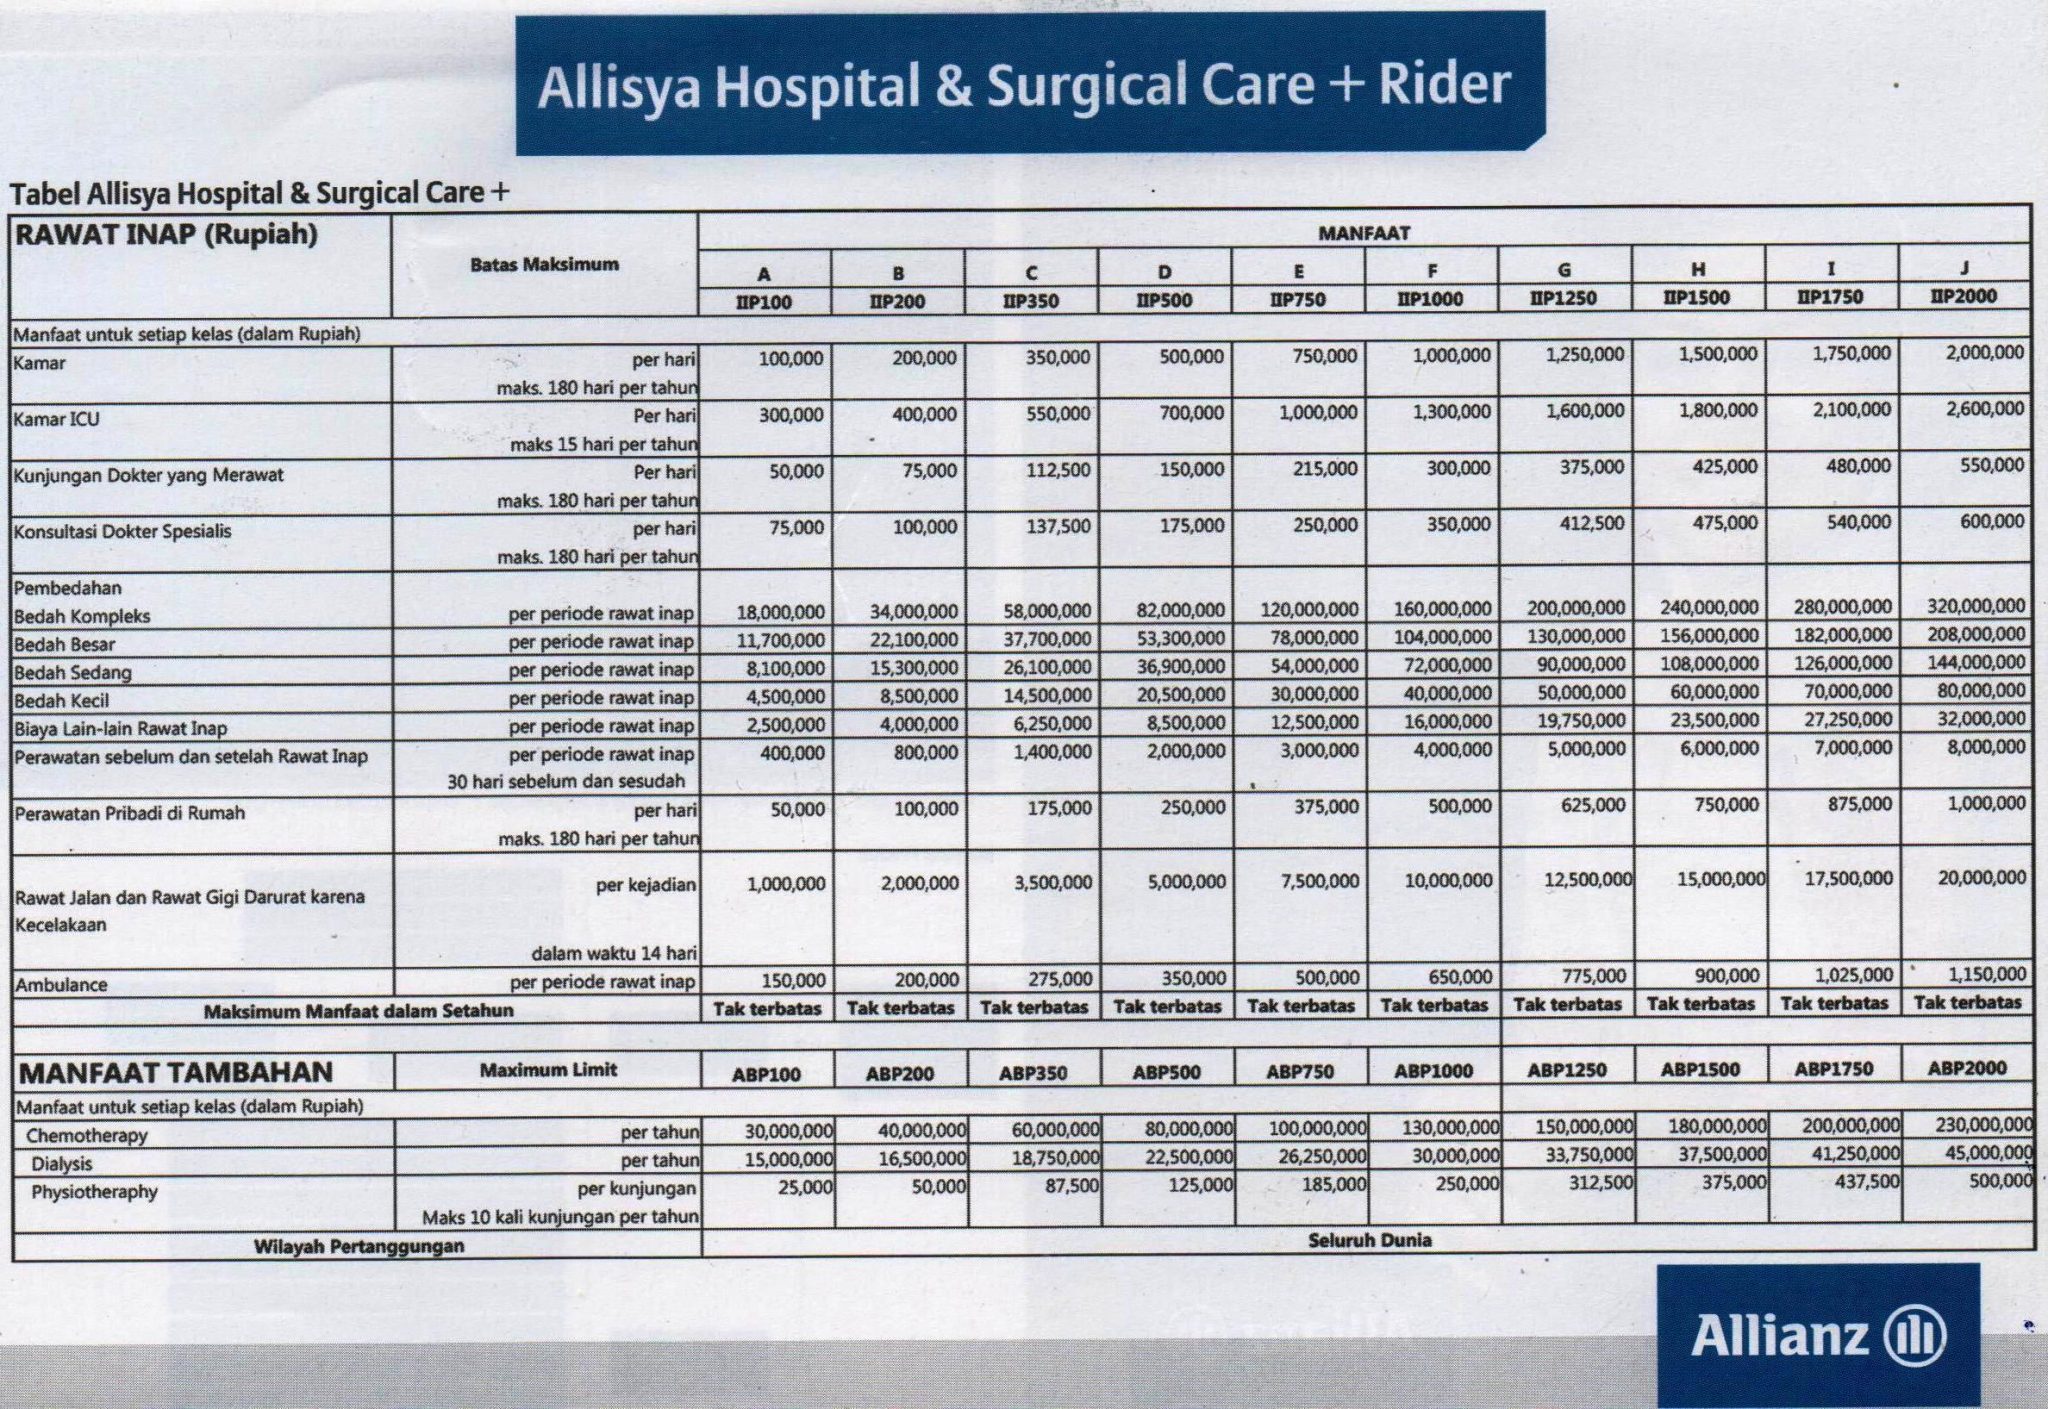 Allisya Hospital Surgical Care Plus Rider 2